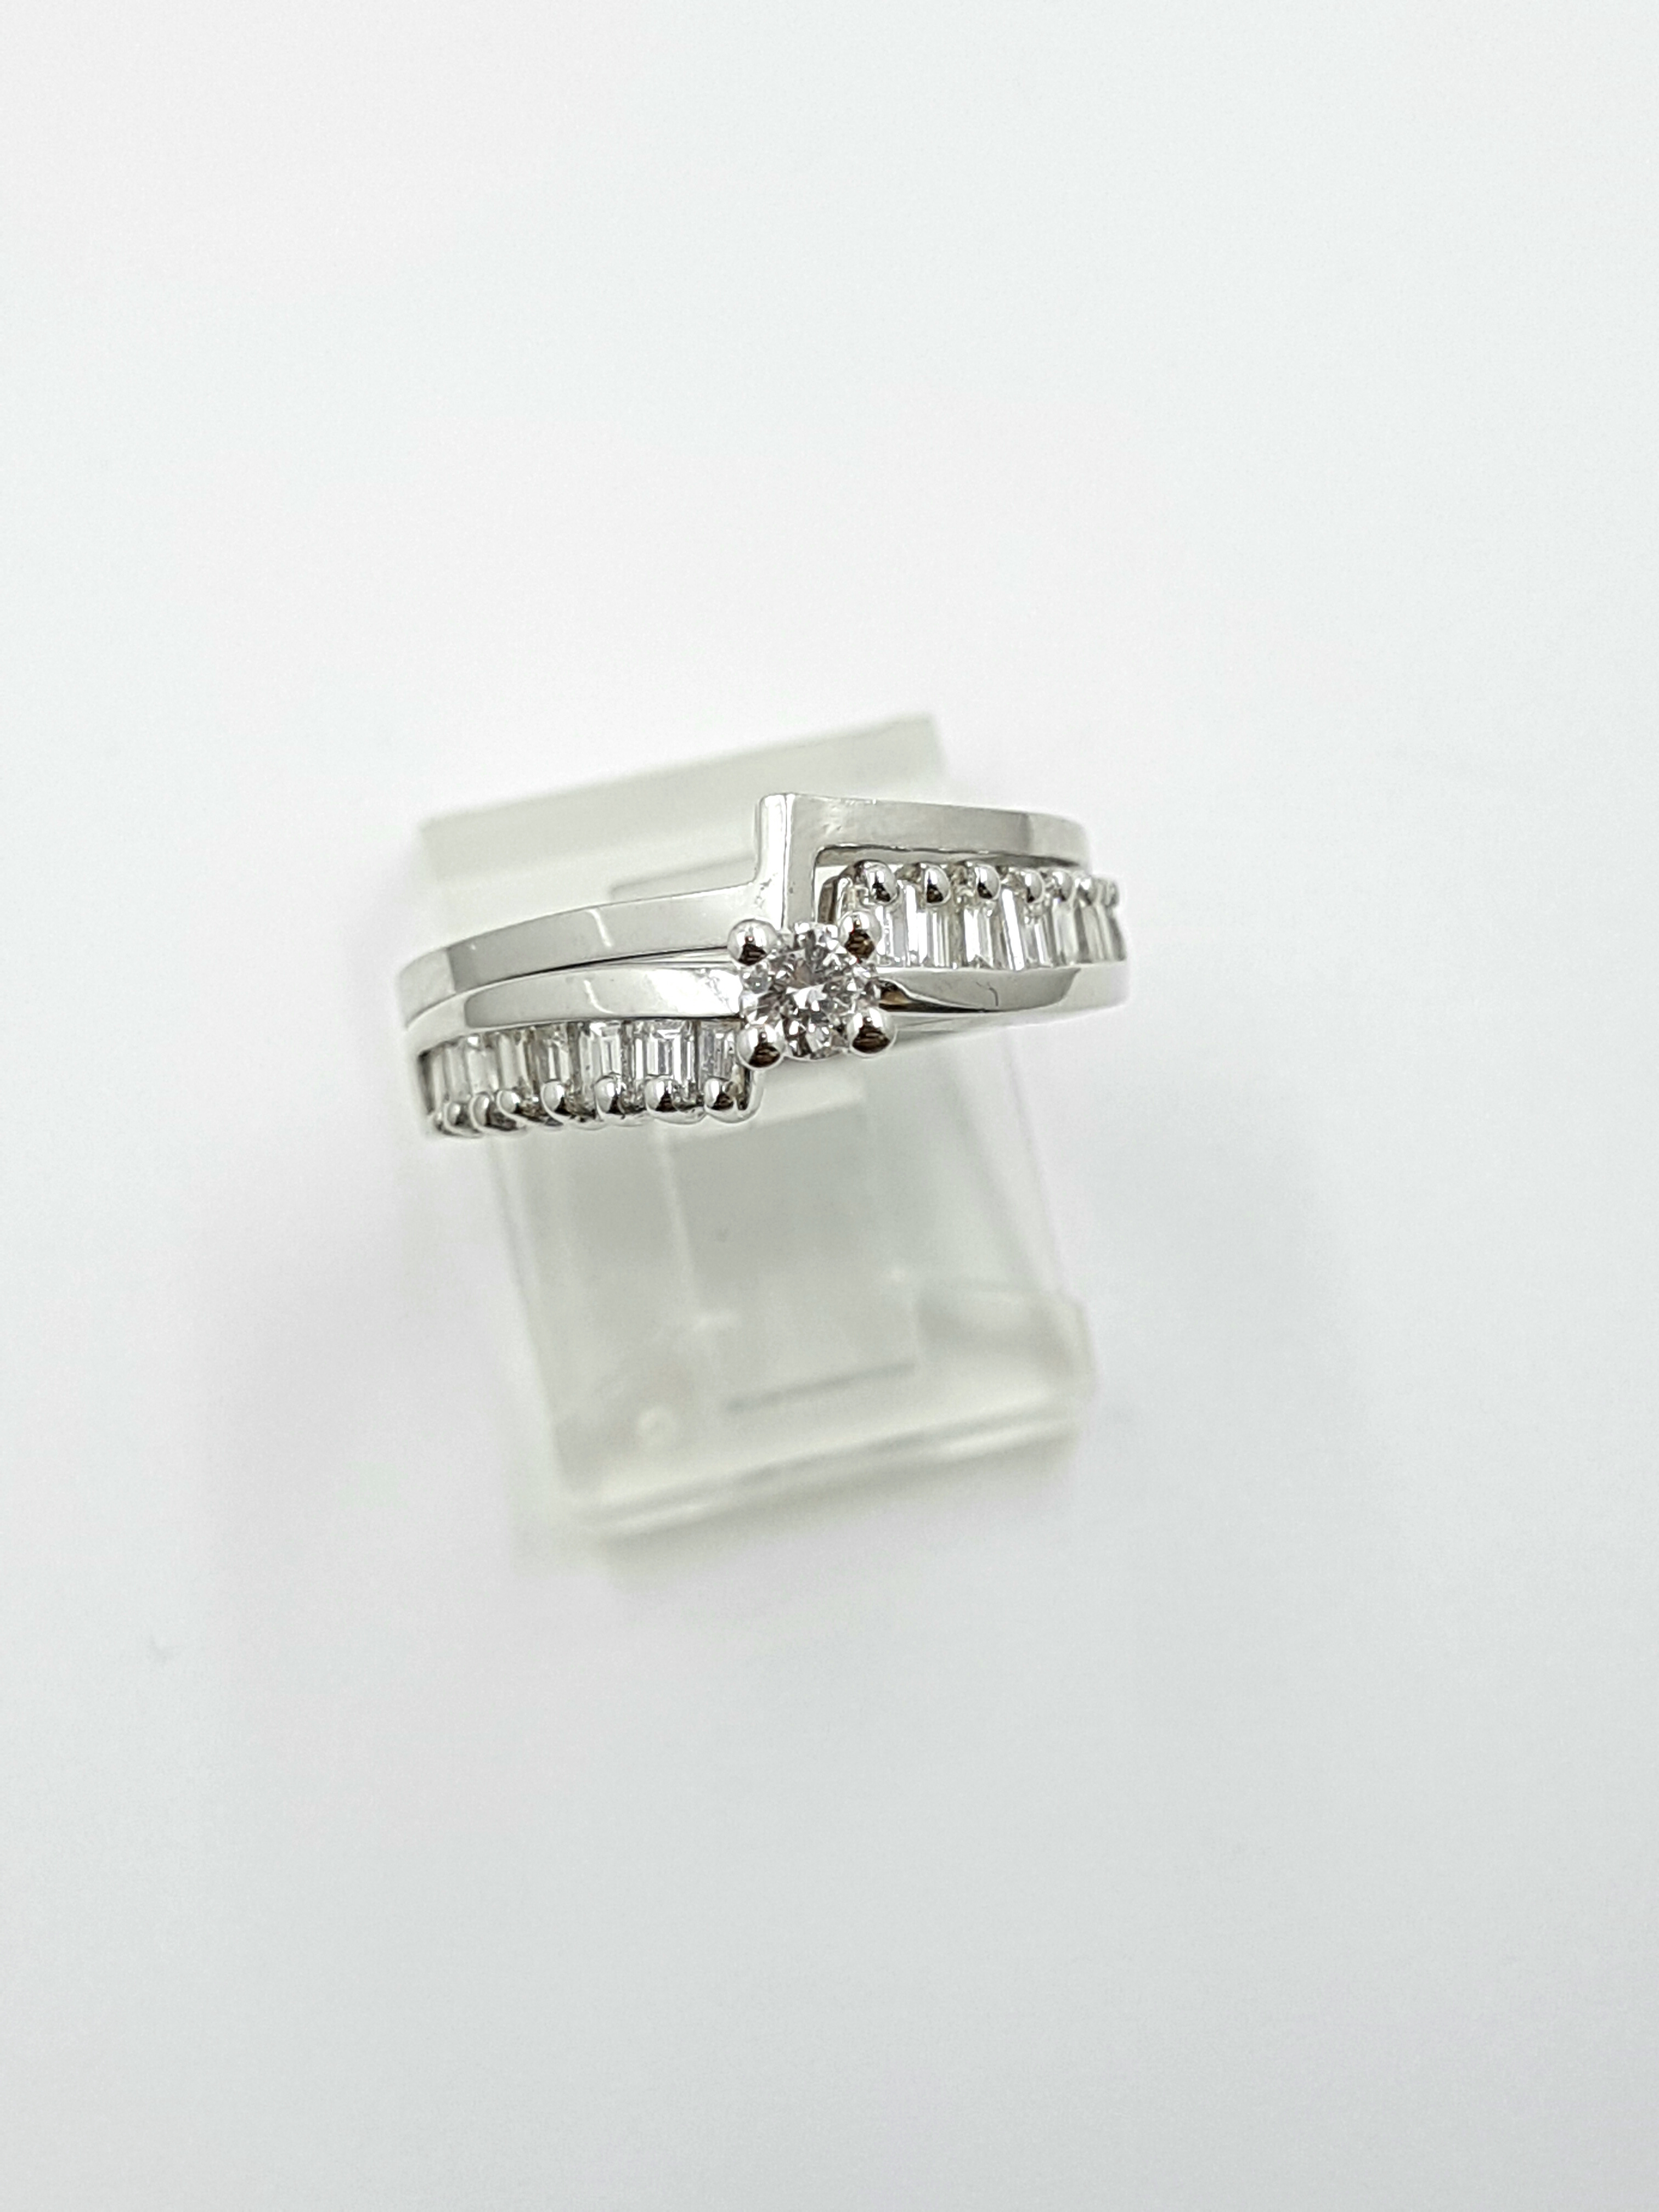 Engagement Ring & Wedding Band
14K White Gold
0.65ct Total
Regular Price $4775
SALE $1150
Ref: DER119+W